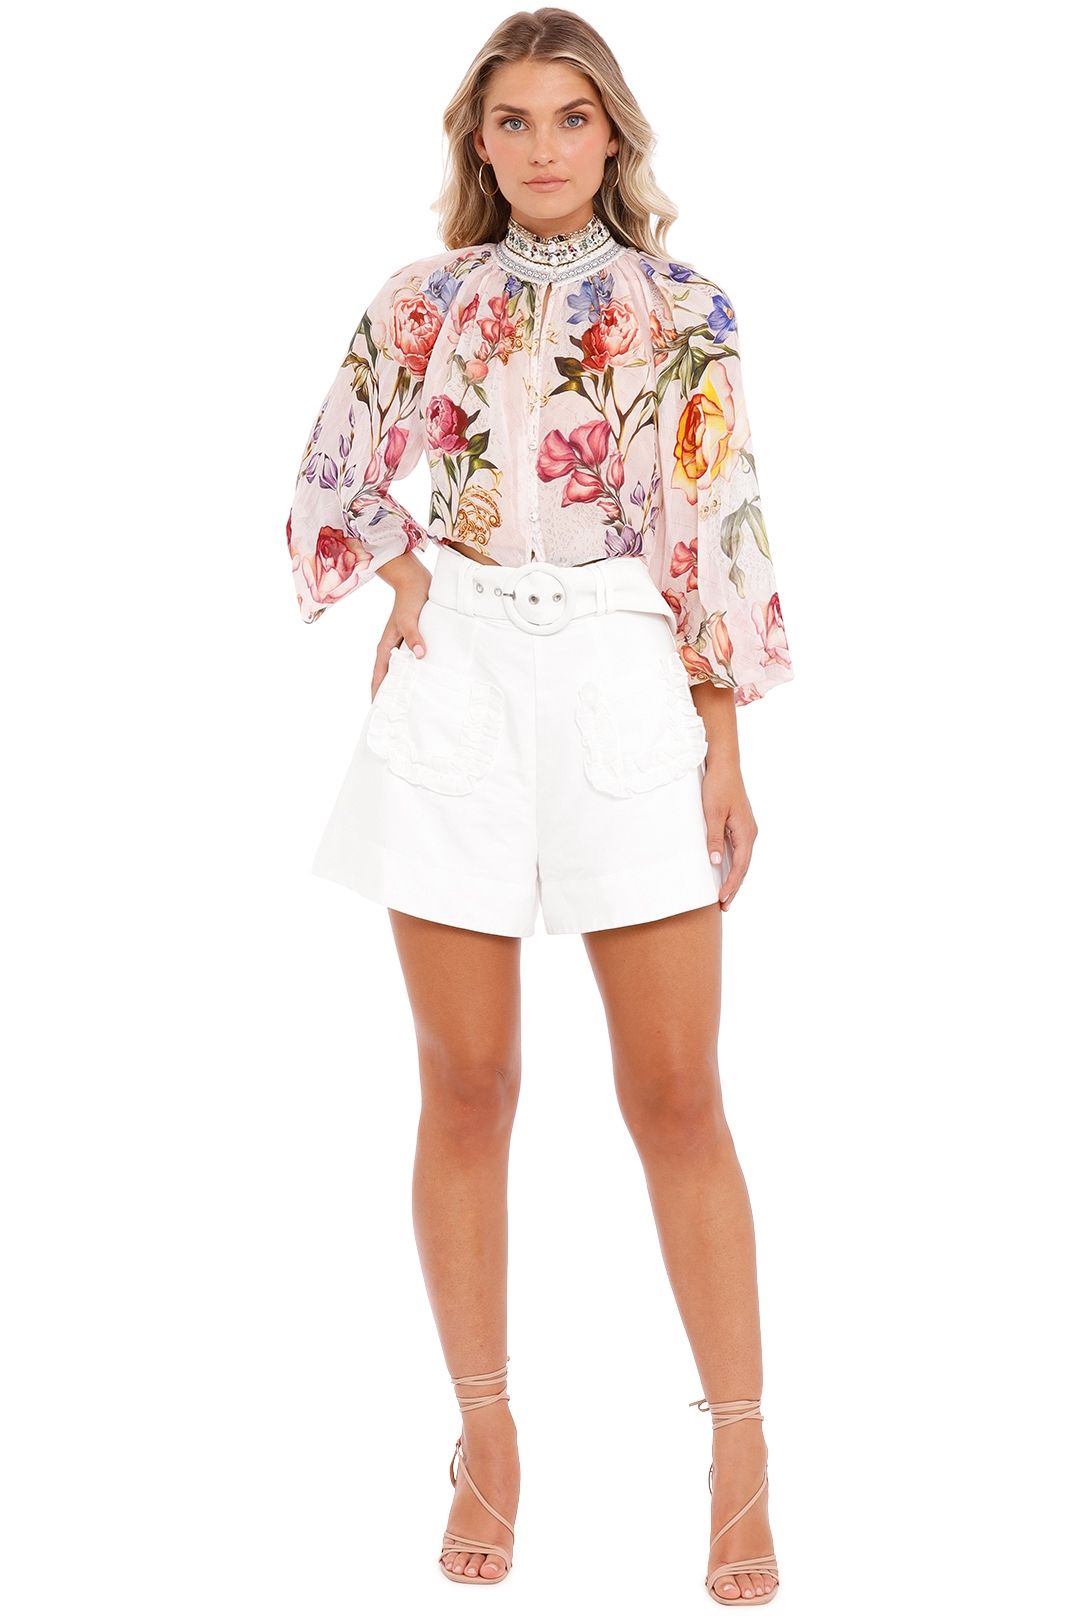 Camilla Raglan Button Up Shirt Sew In Love floral